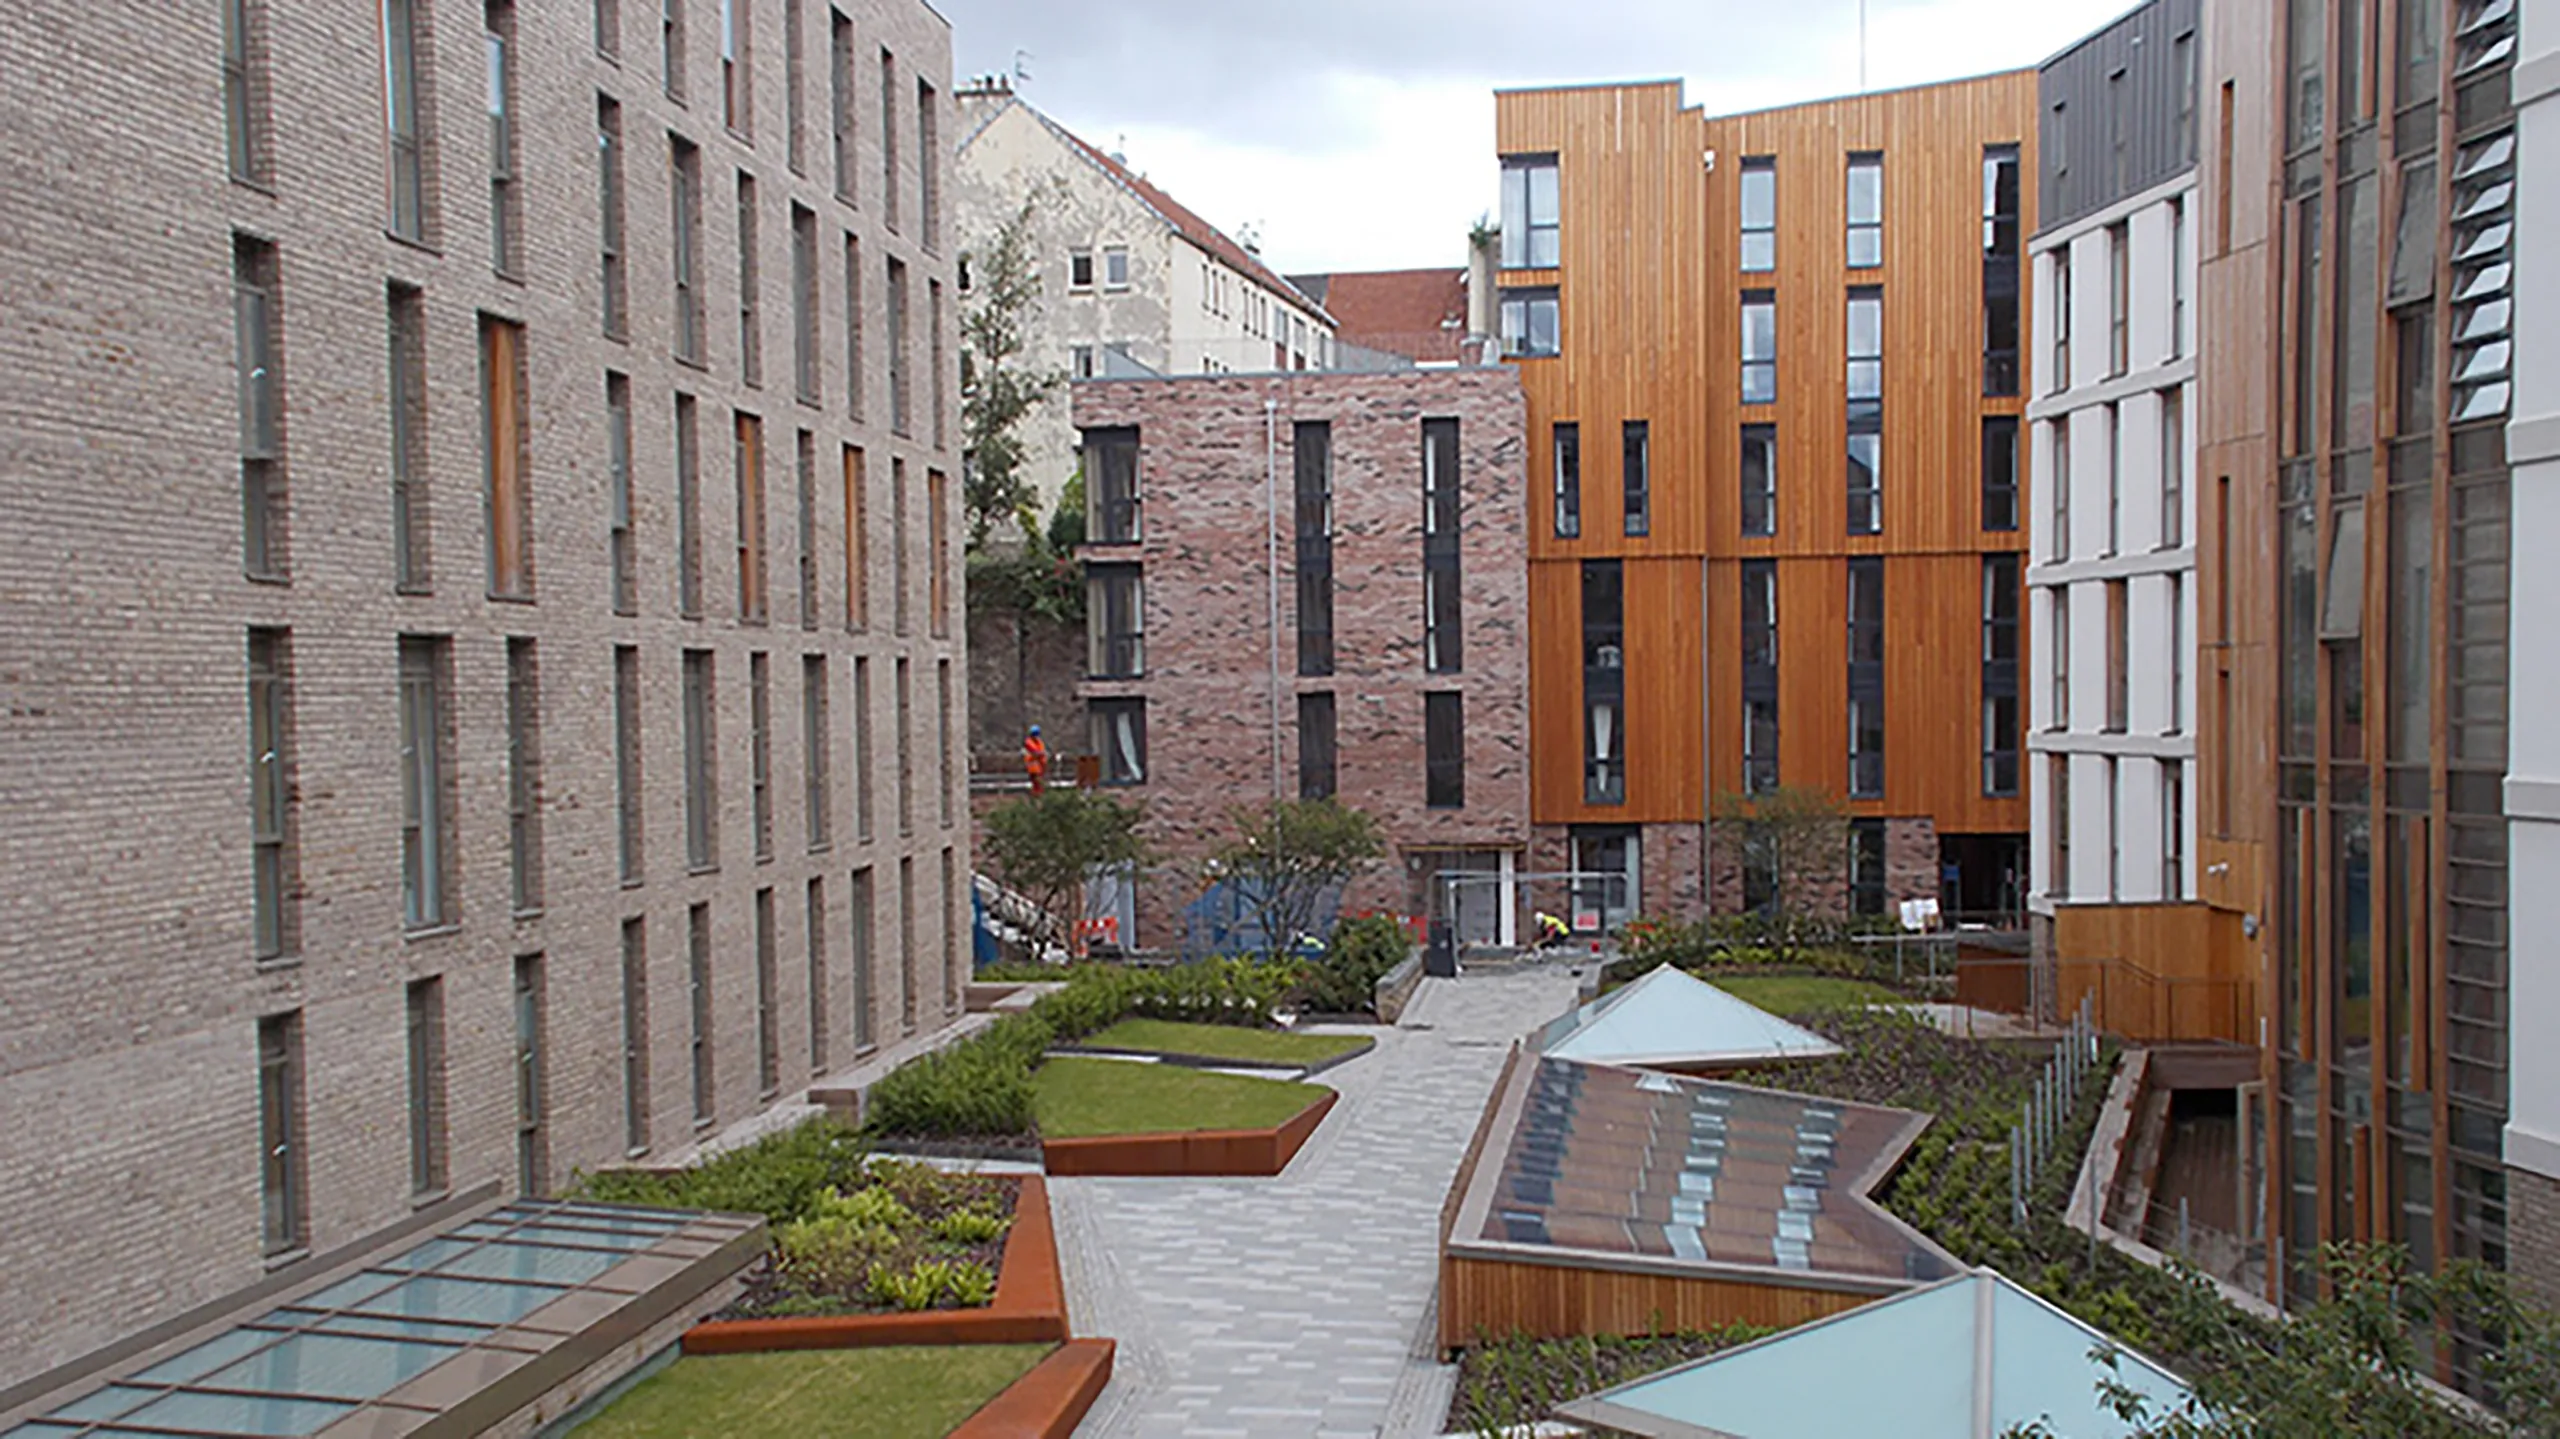 student accommodation investments - Holyrood Student Accommodation